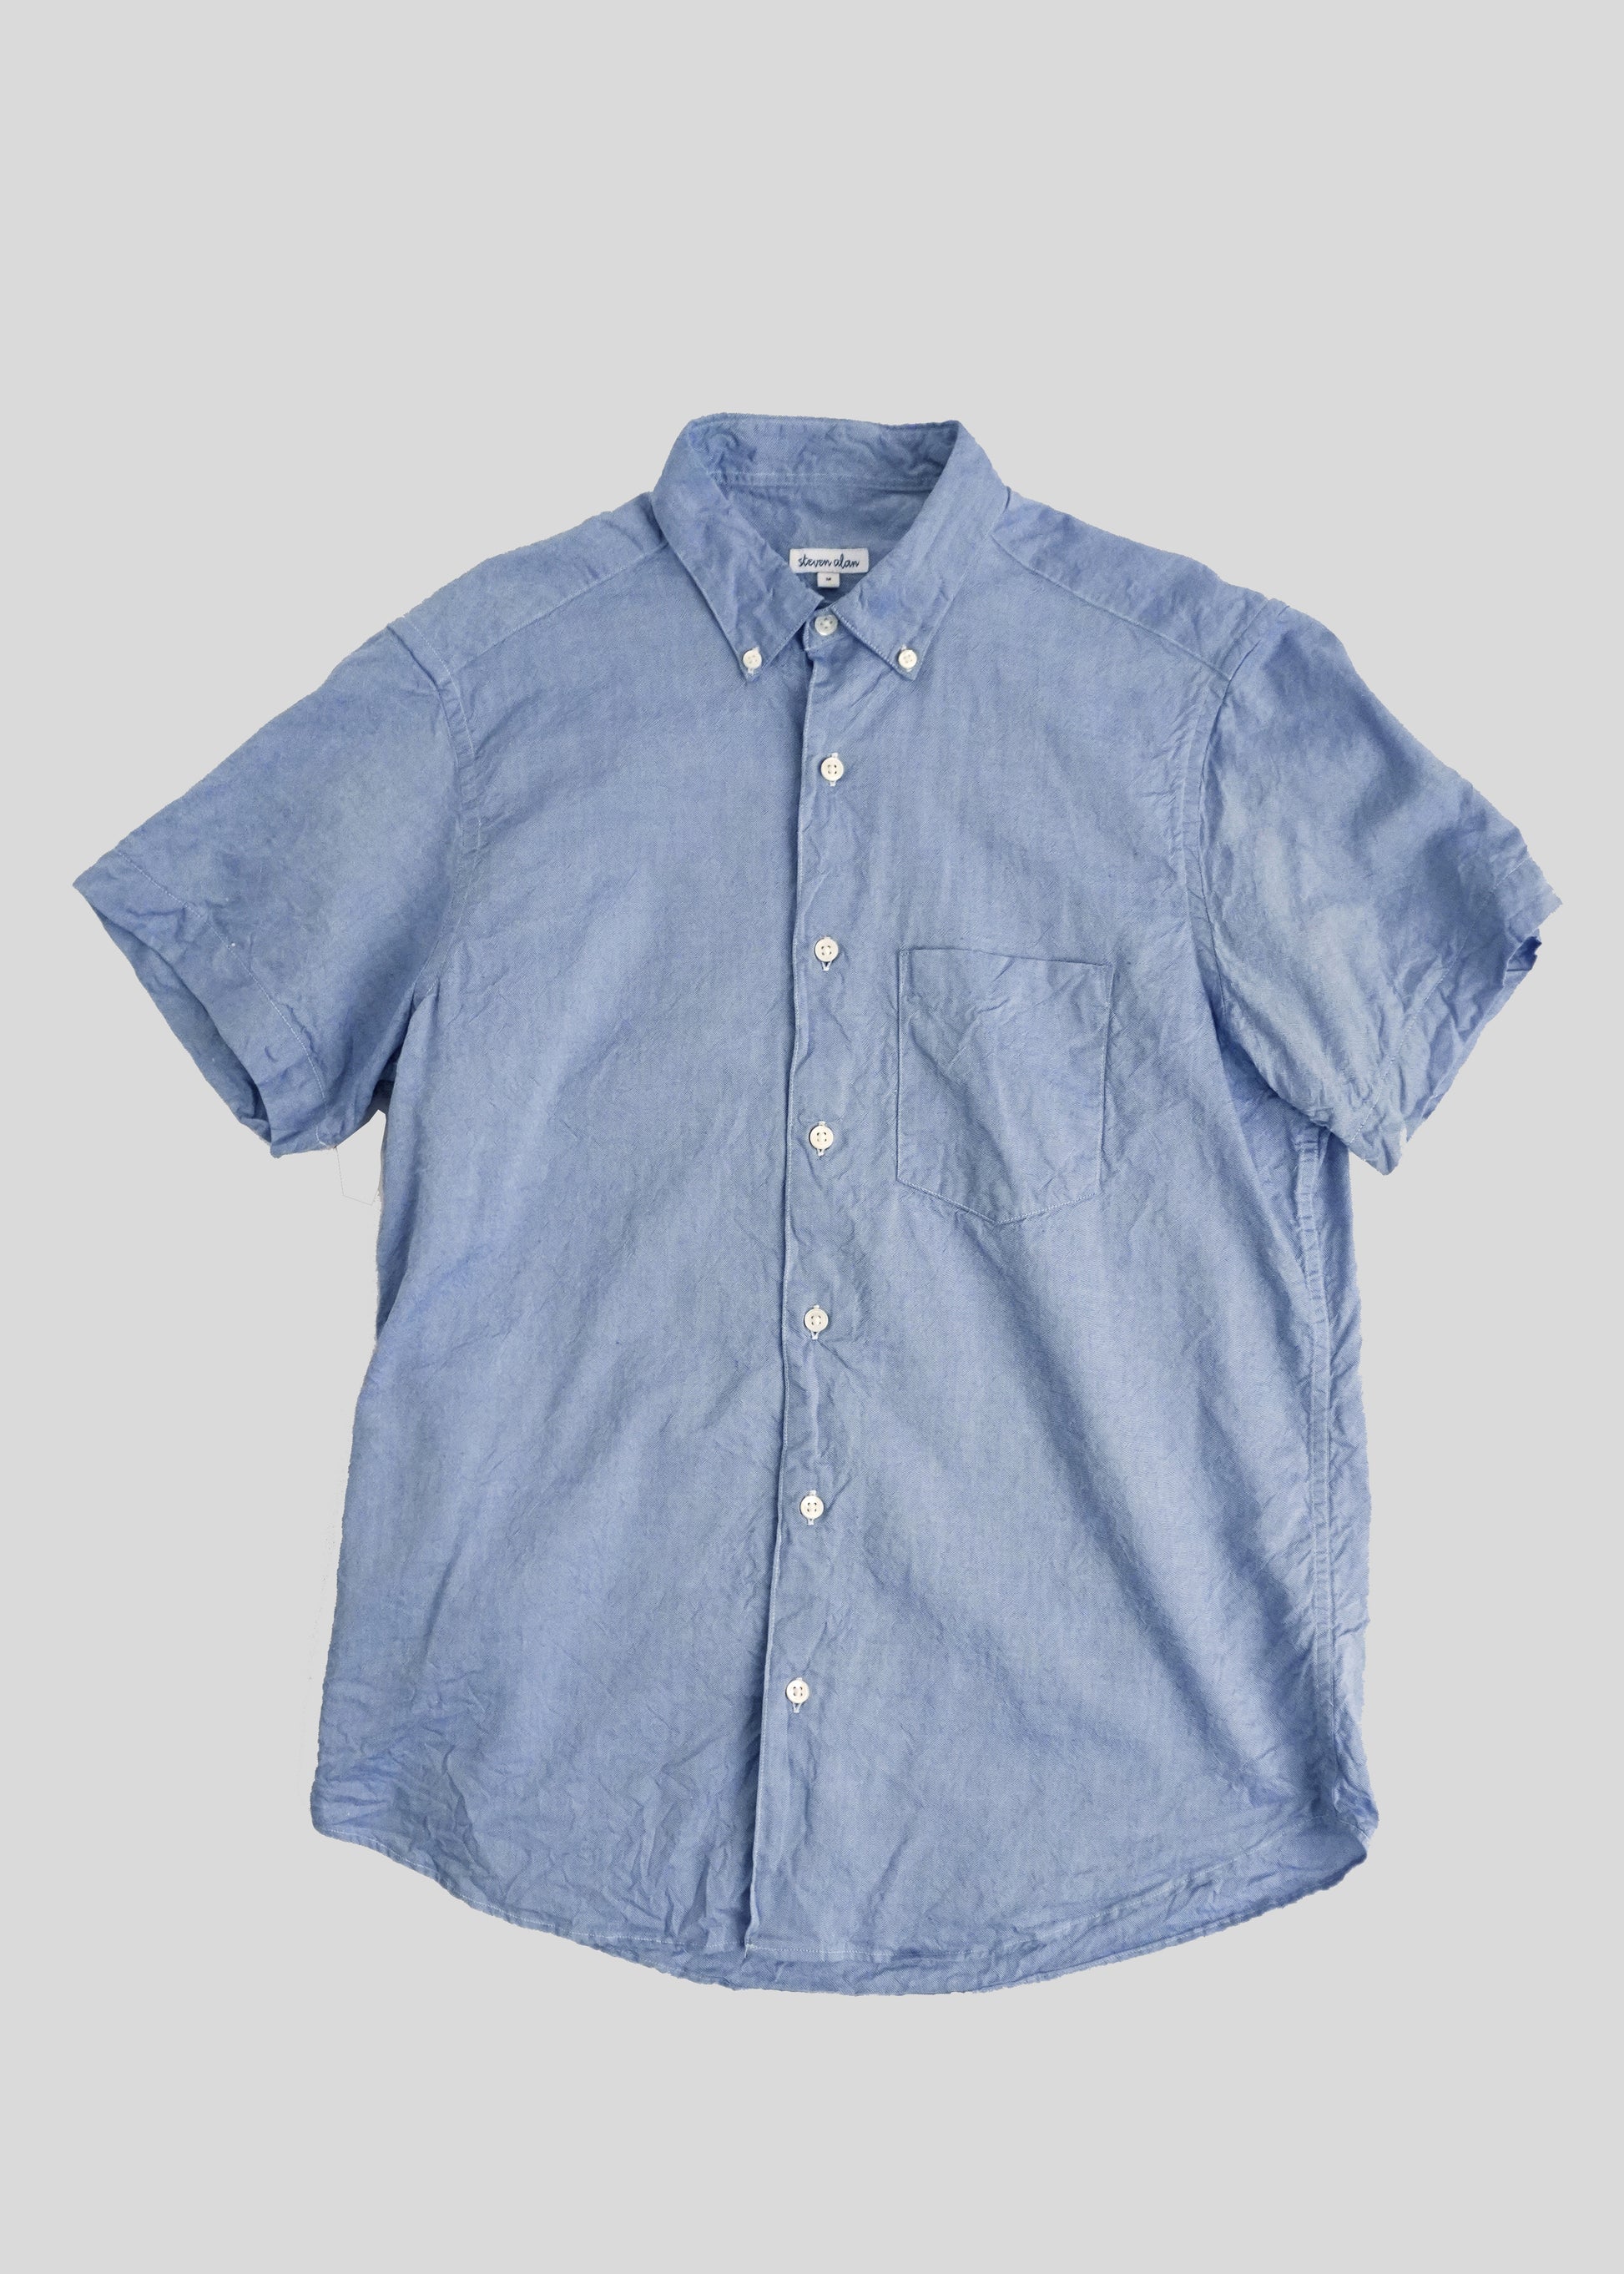 Short Sleeve Single Needle Shirt, Light Blue Crinkle Cotton – Steven Alan